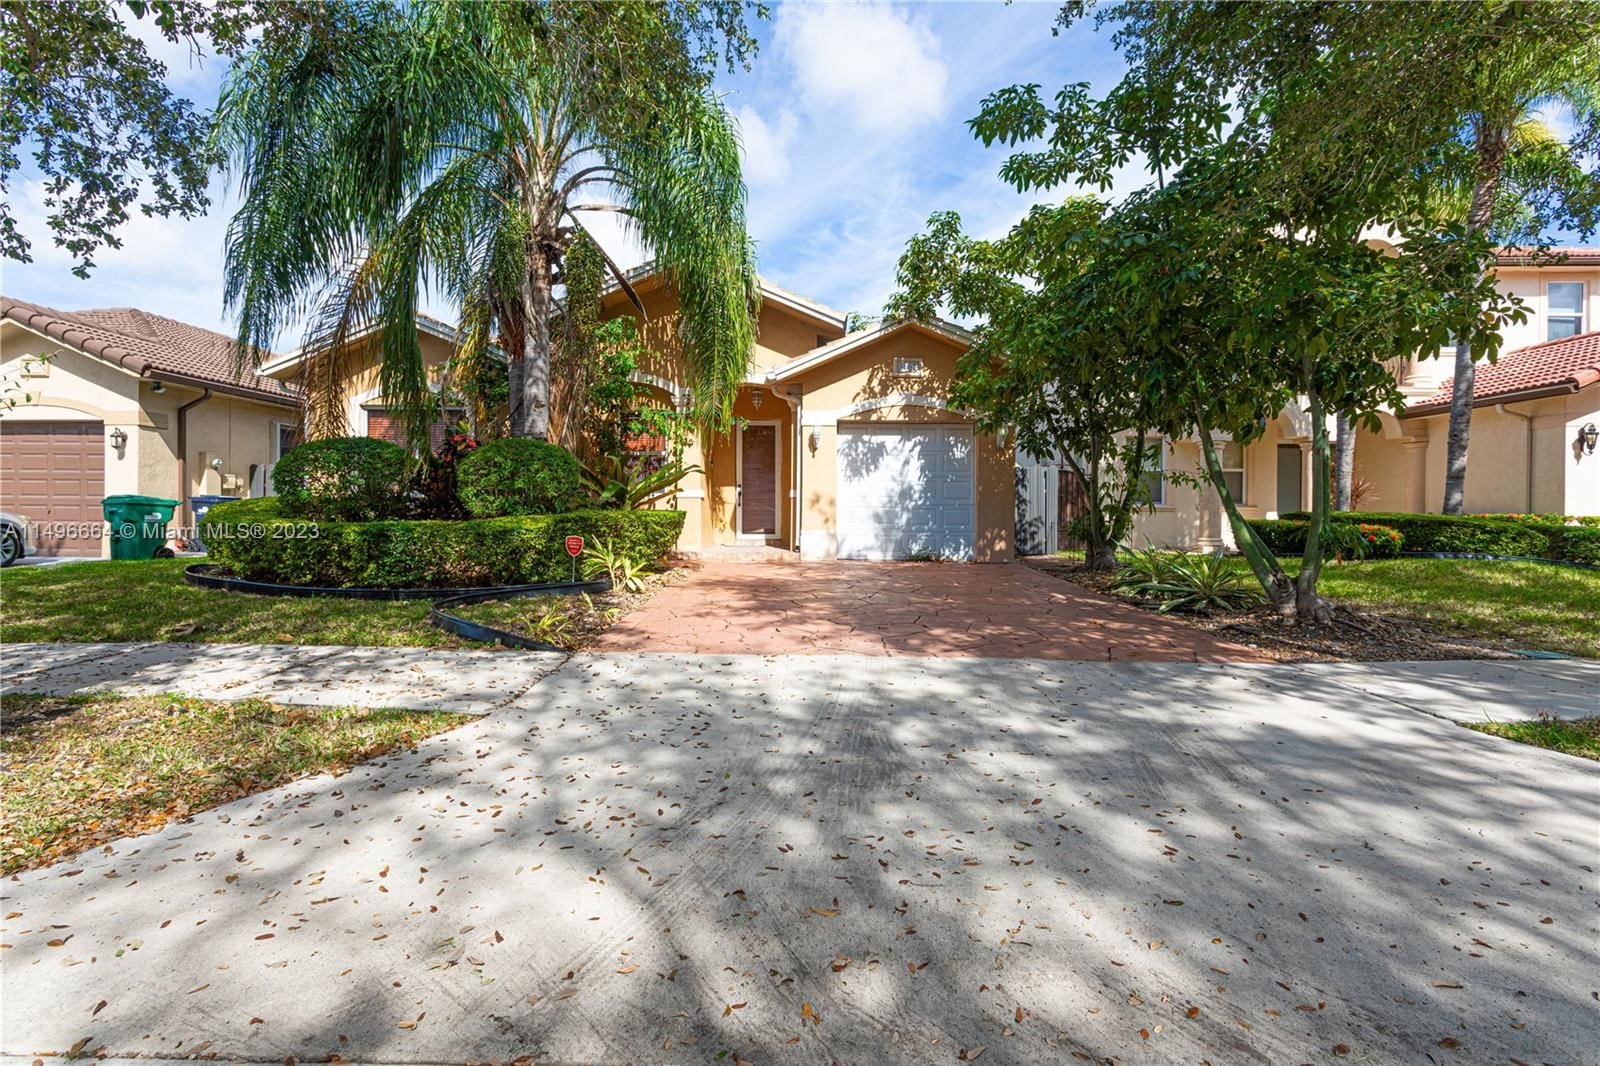 Real estate property located at 8887 139th Ter, Miami-Dade County, FLORINDA ESTATES, Miami Lakes, FL